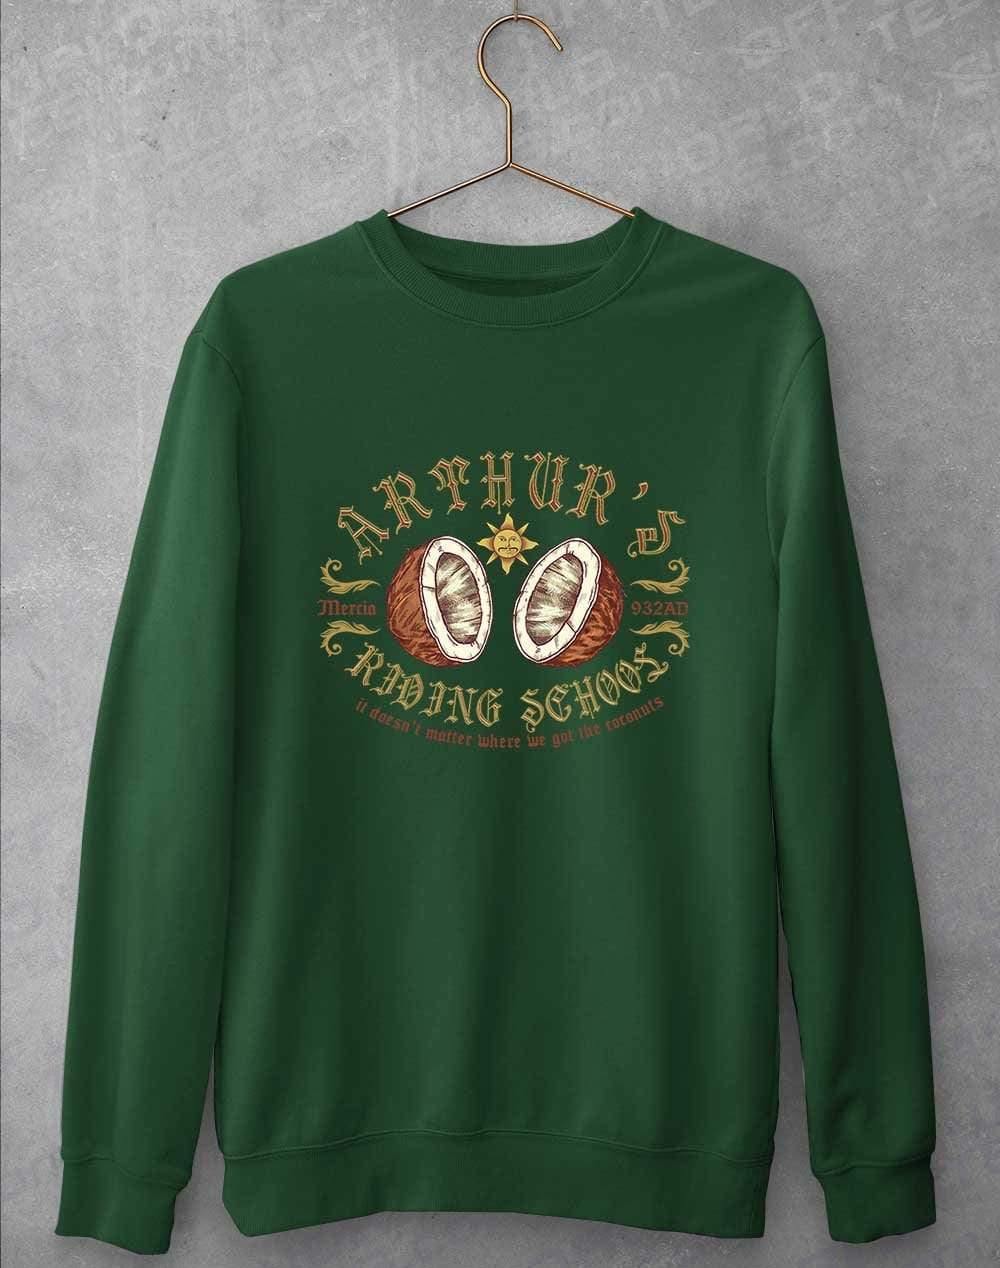 King Arthur's Riding School Sweatshirt S / Bottle Green  - Off World Tees